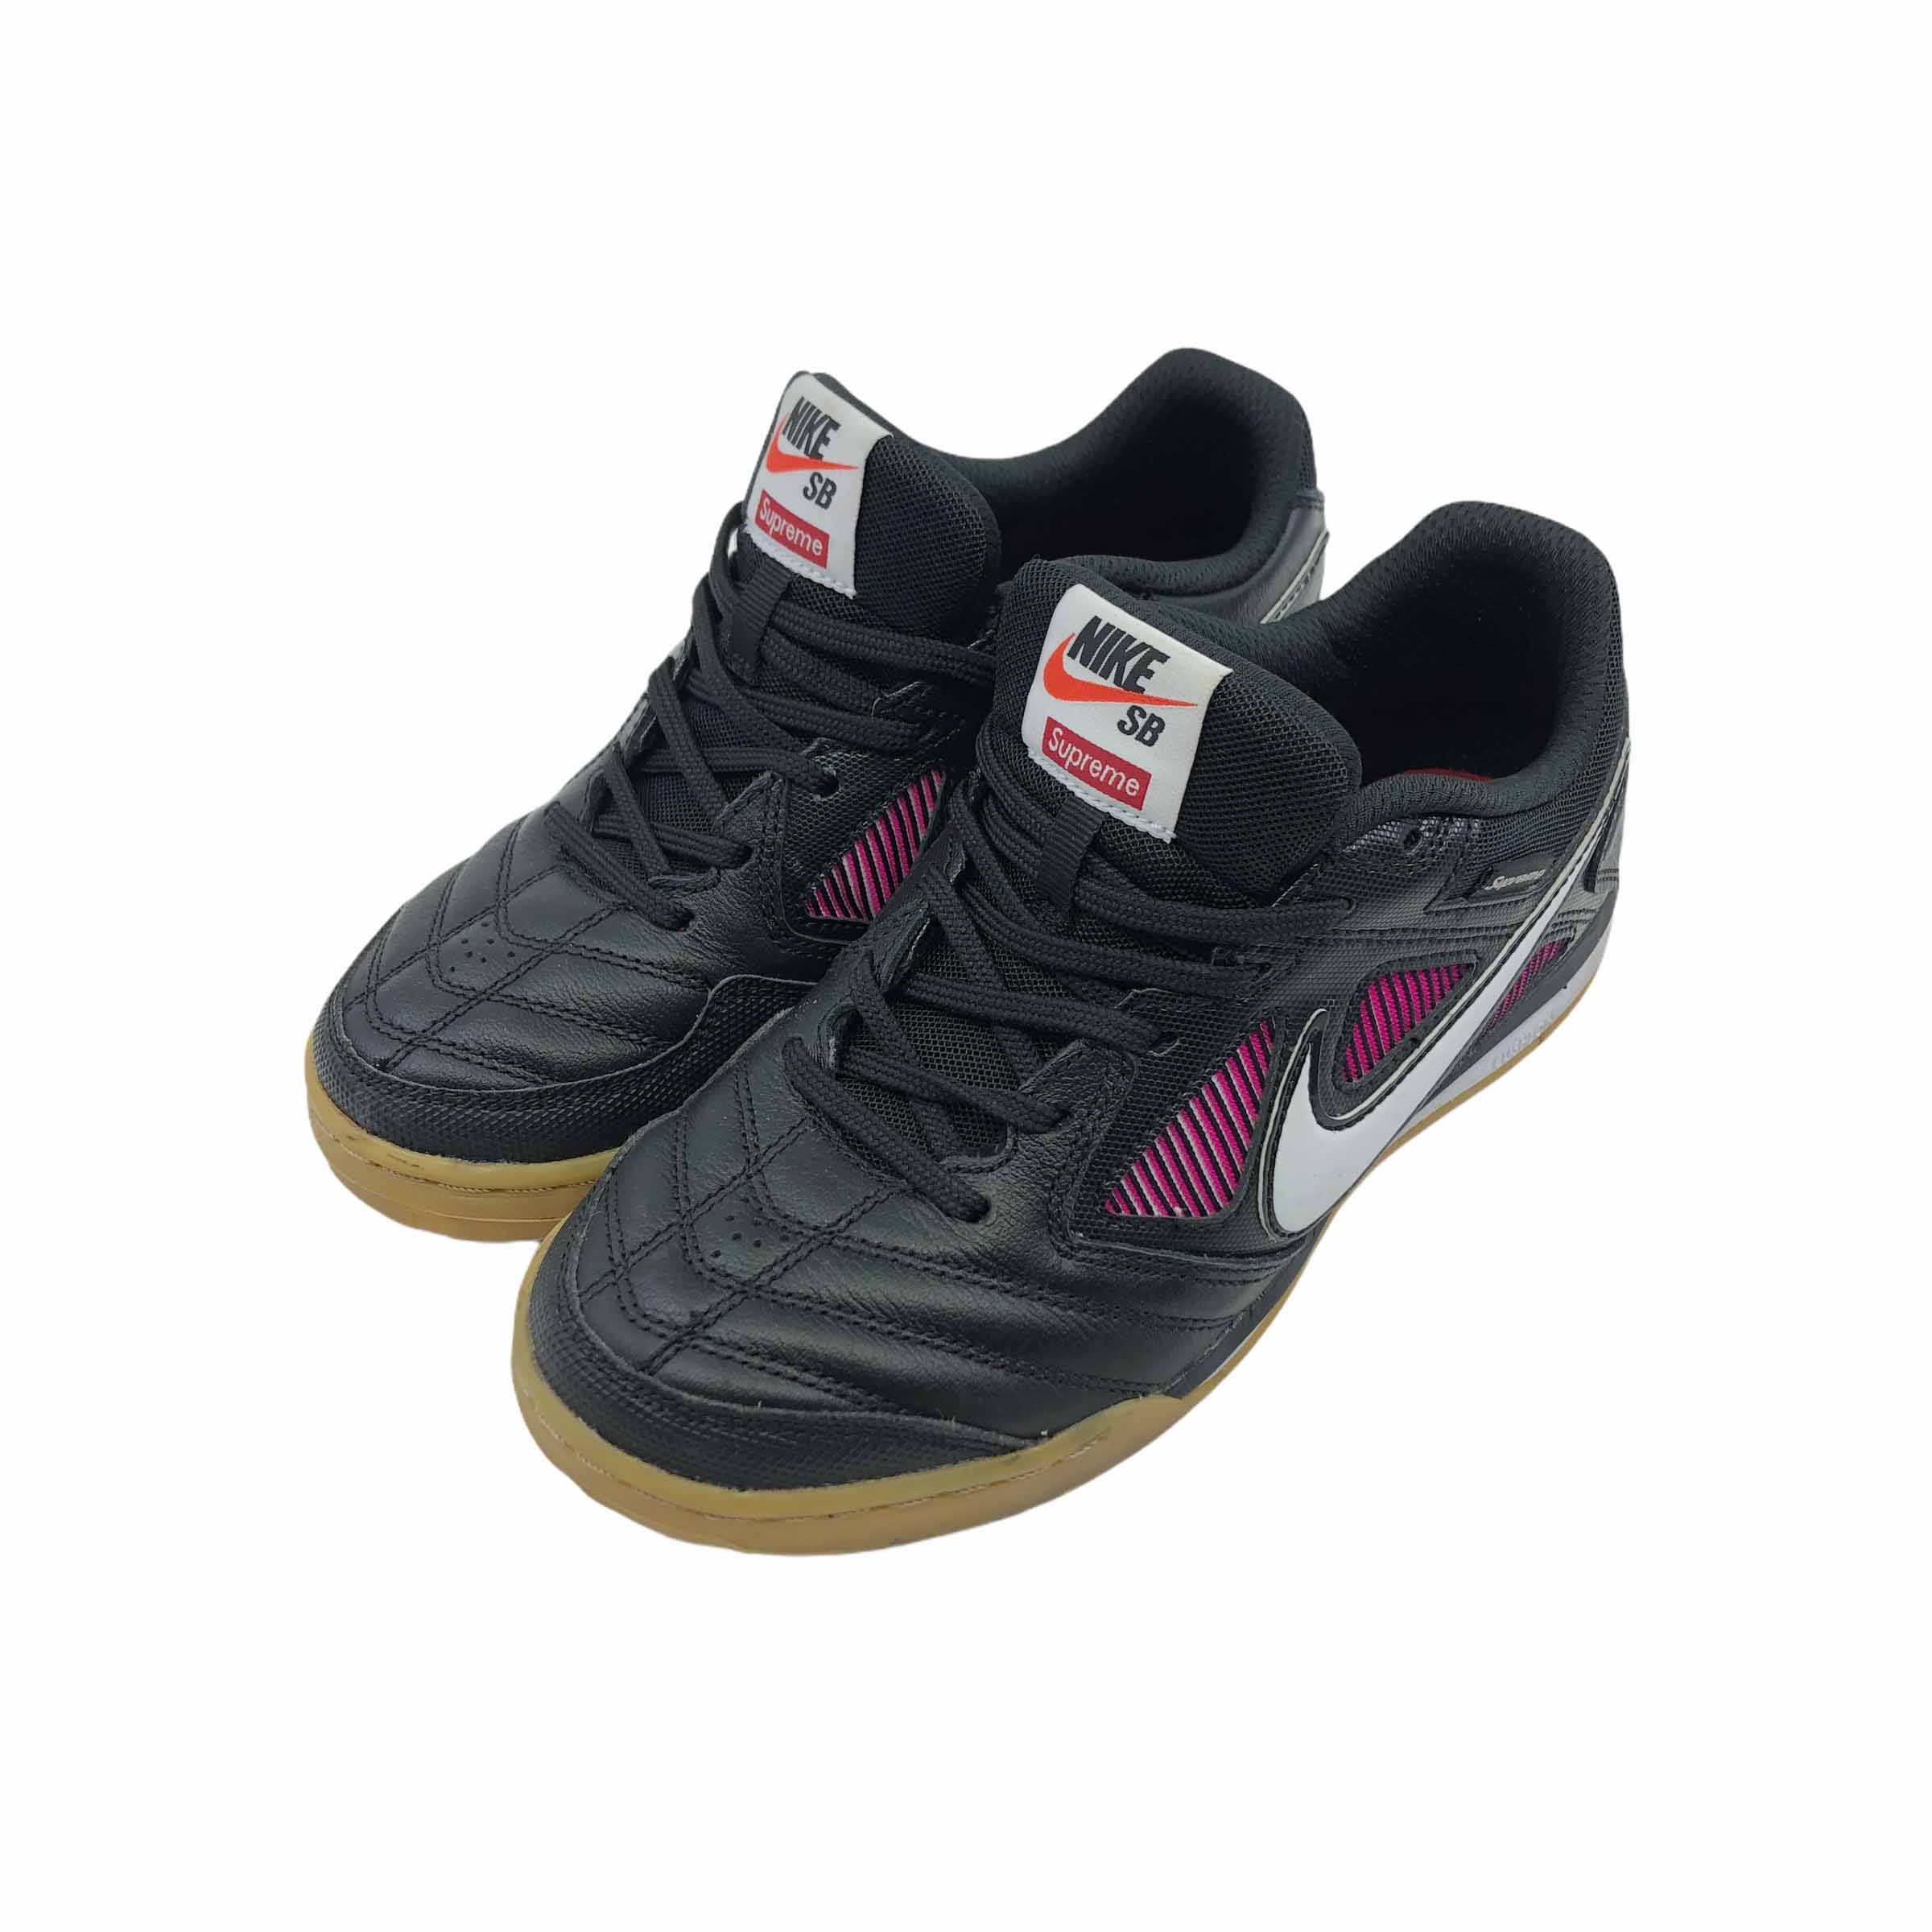 [Supreme x Nike] SB Gato Sneakers - Size 240